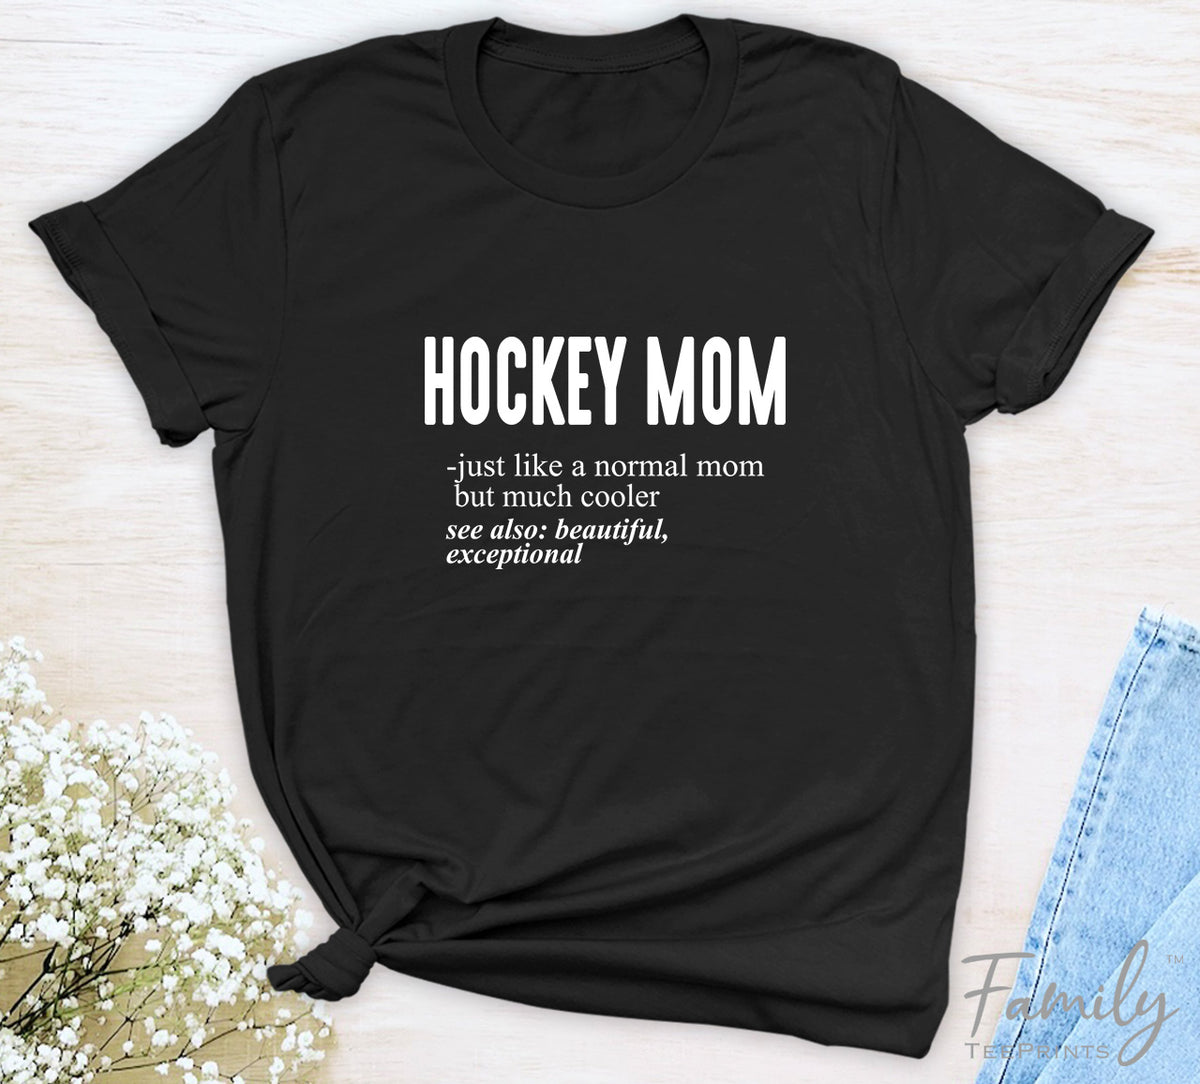 Hockey Mom Just Like A Normal Mom - Unisex T-shirt - Hockey Mom Shirt - Gift For Hockey Mom - familyteeprints